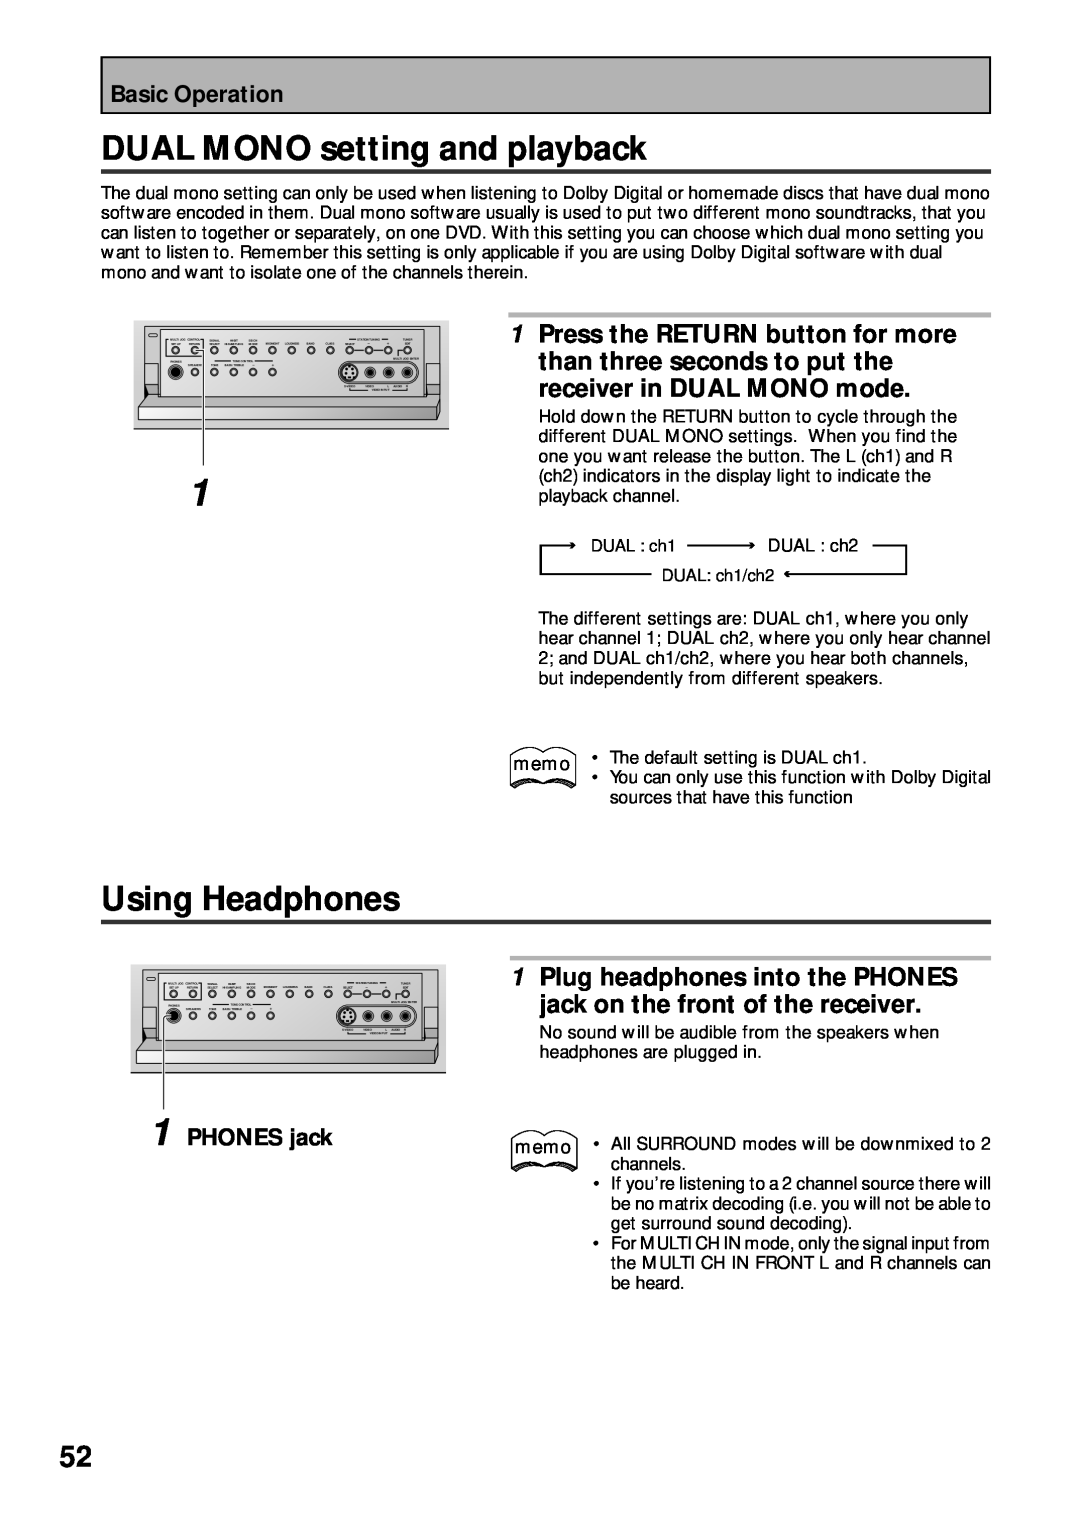 Pioneer VSX-43TX DUAL MONO setting and playback, Using Headphones, receiver in DUAL MONO mode, PHONES jack 